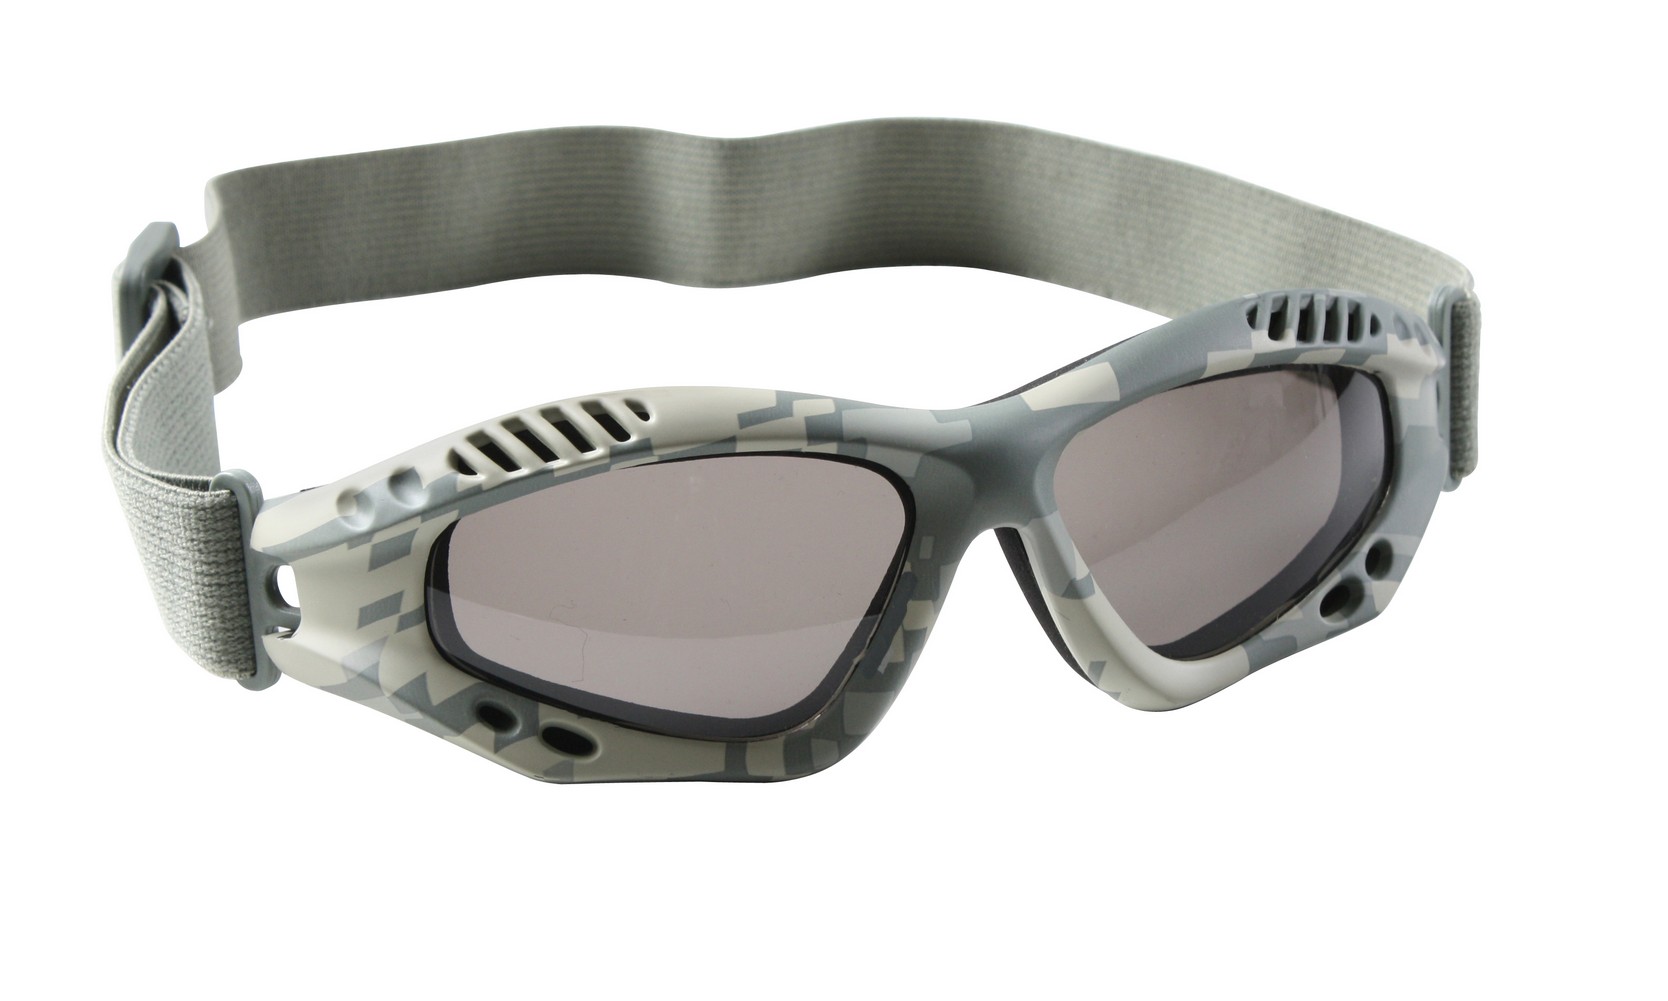 Tactical Goggles - Ventec, ACU Digital Camo by Rothco